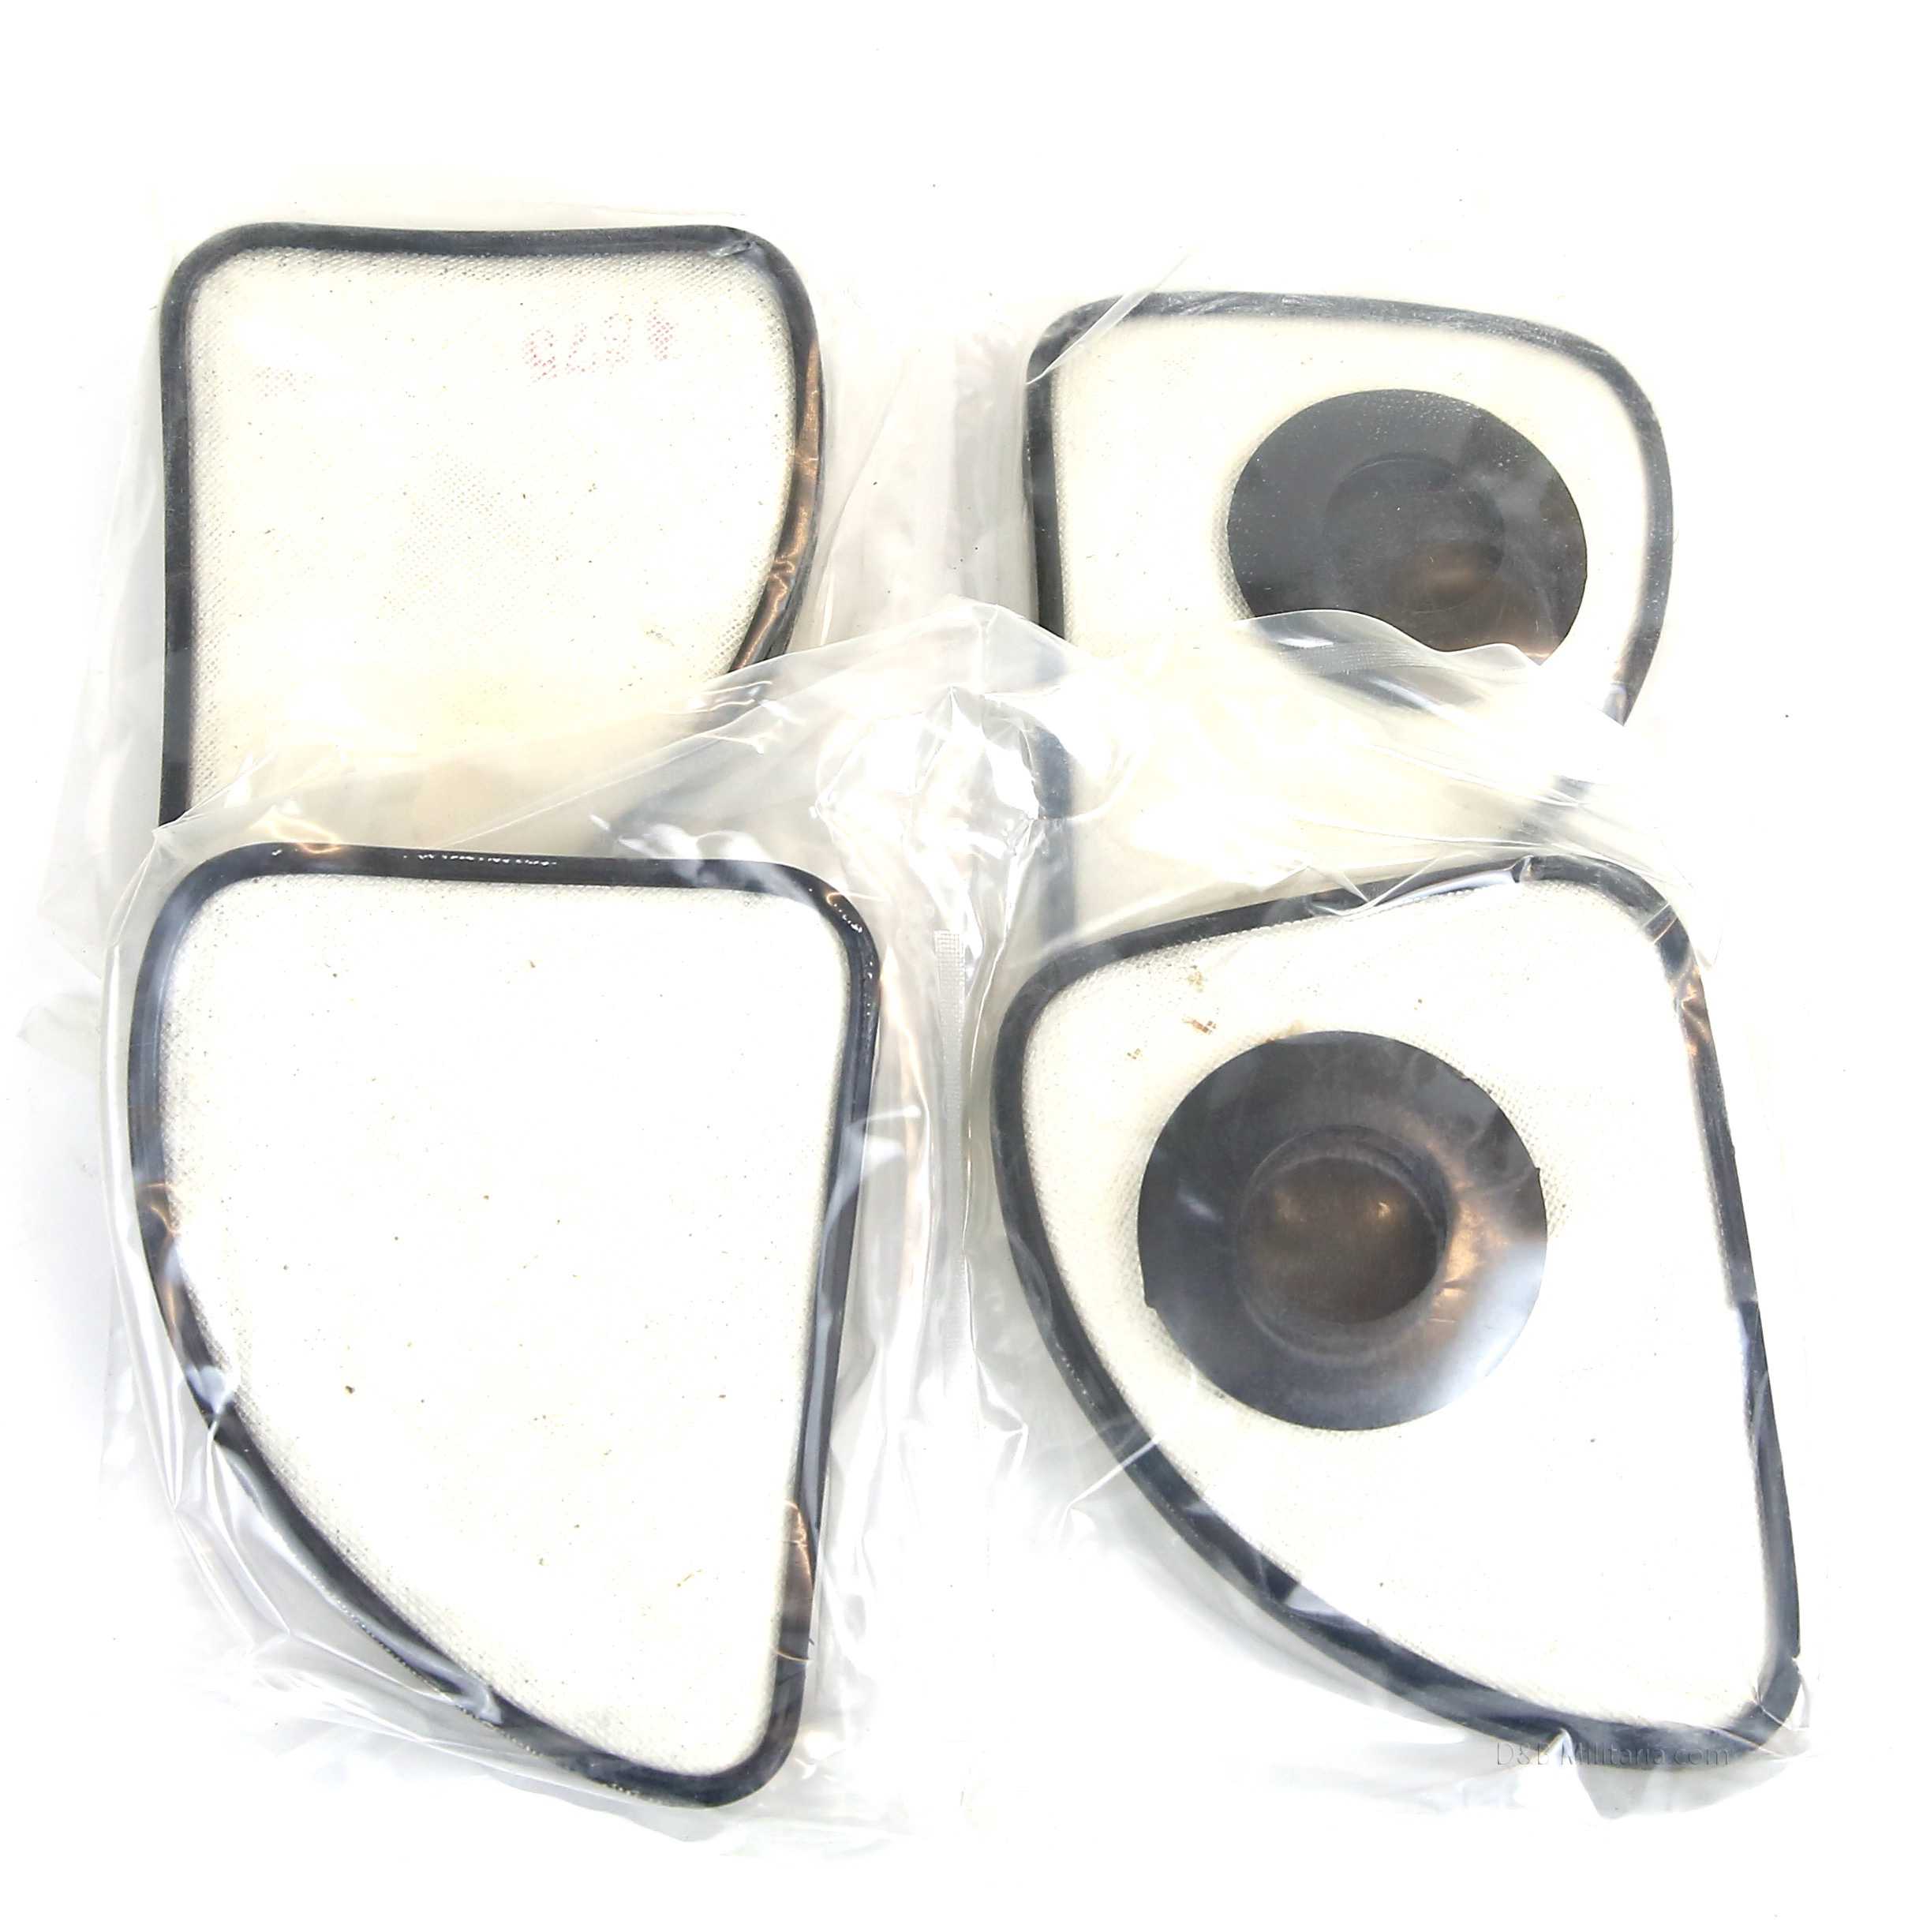 czech m10 gas mask filters